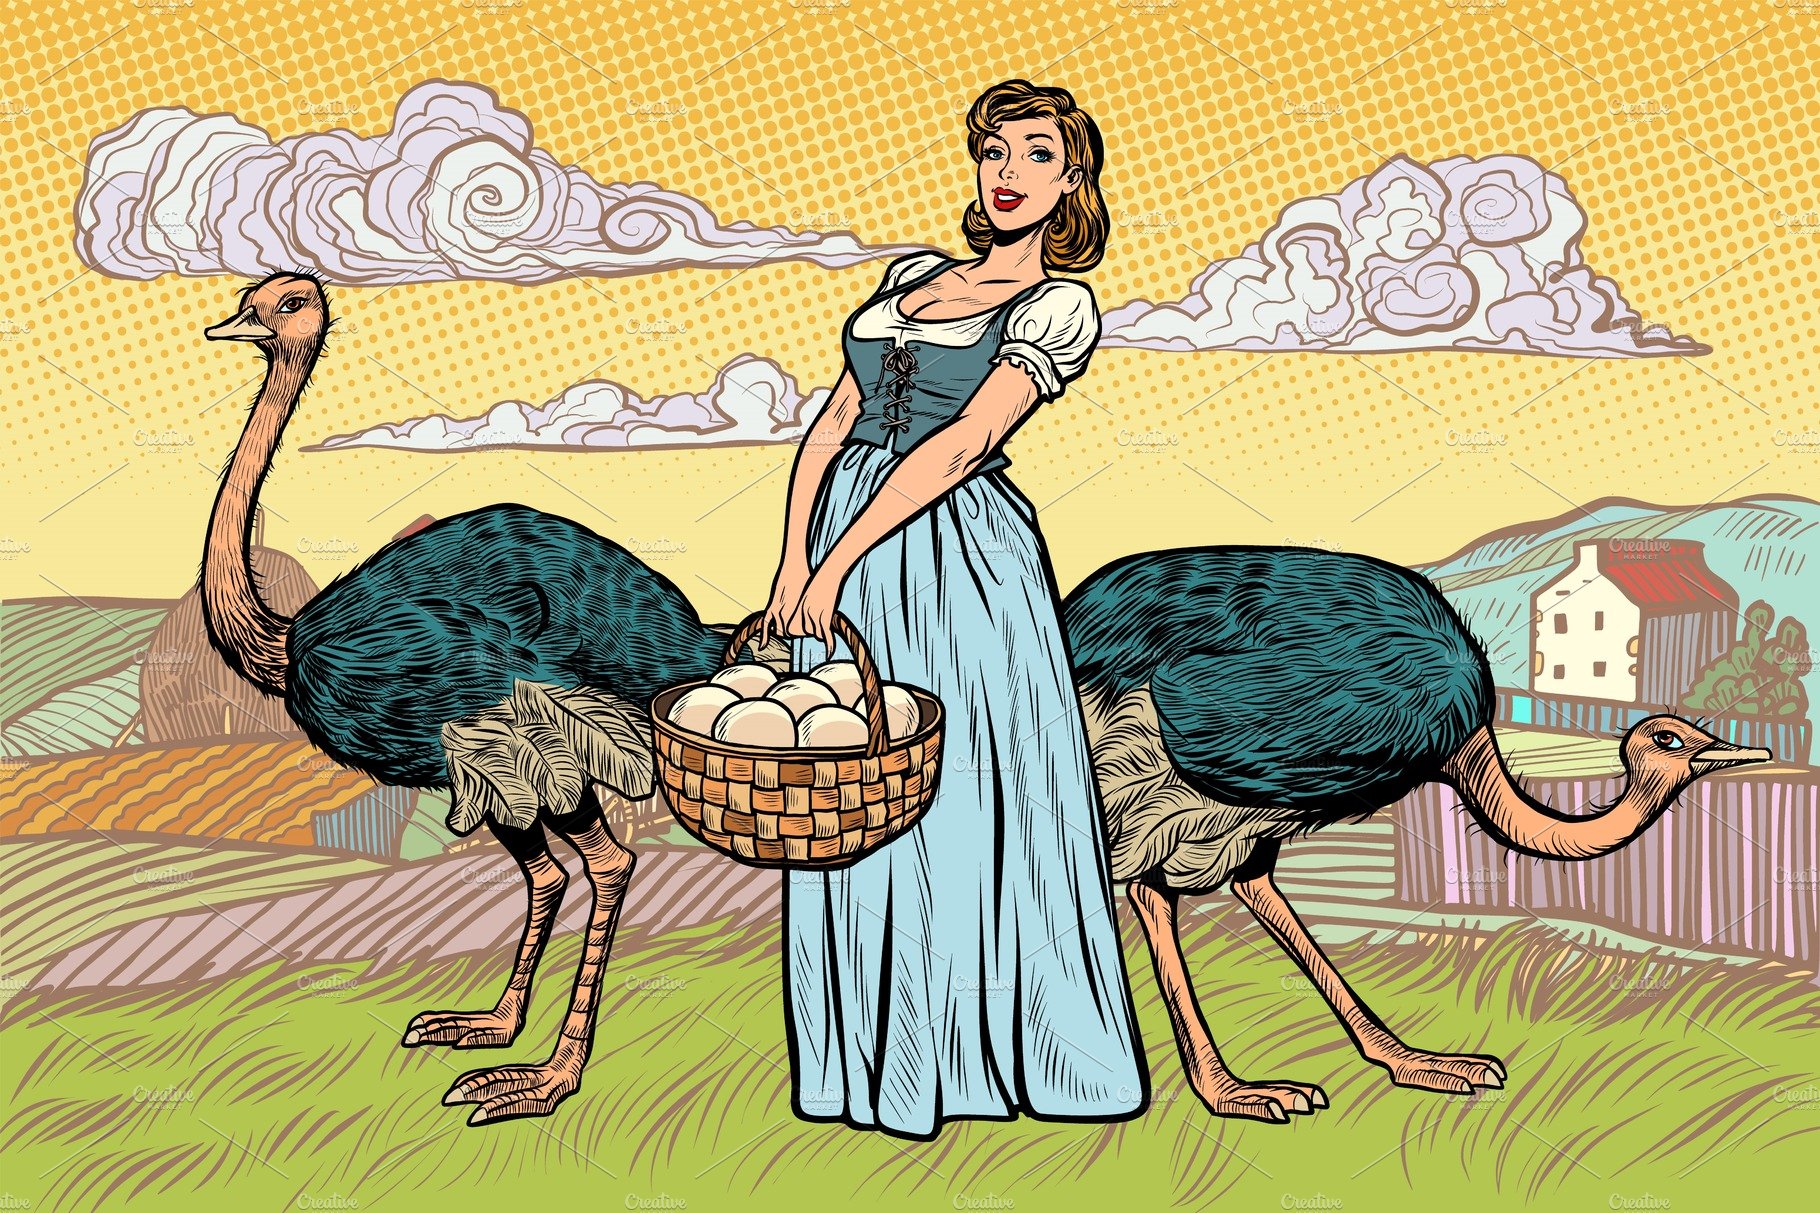 ostrich farm eggs. woman peasant cover image.